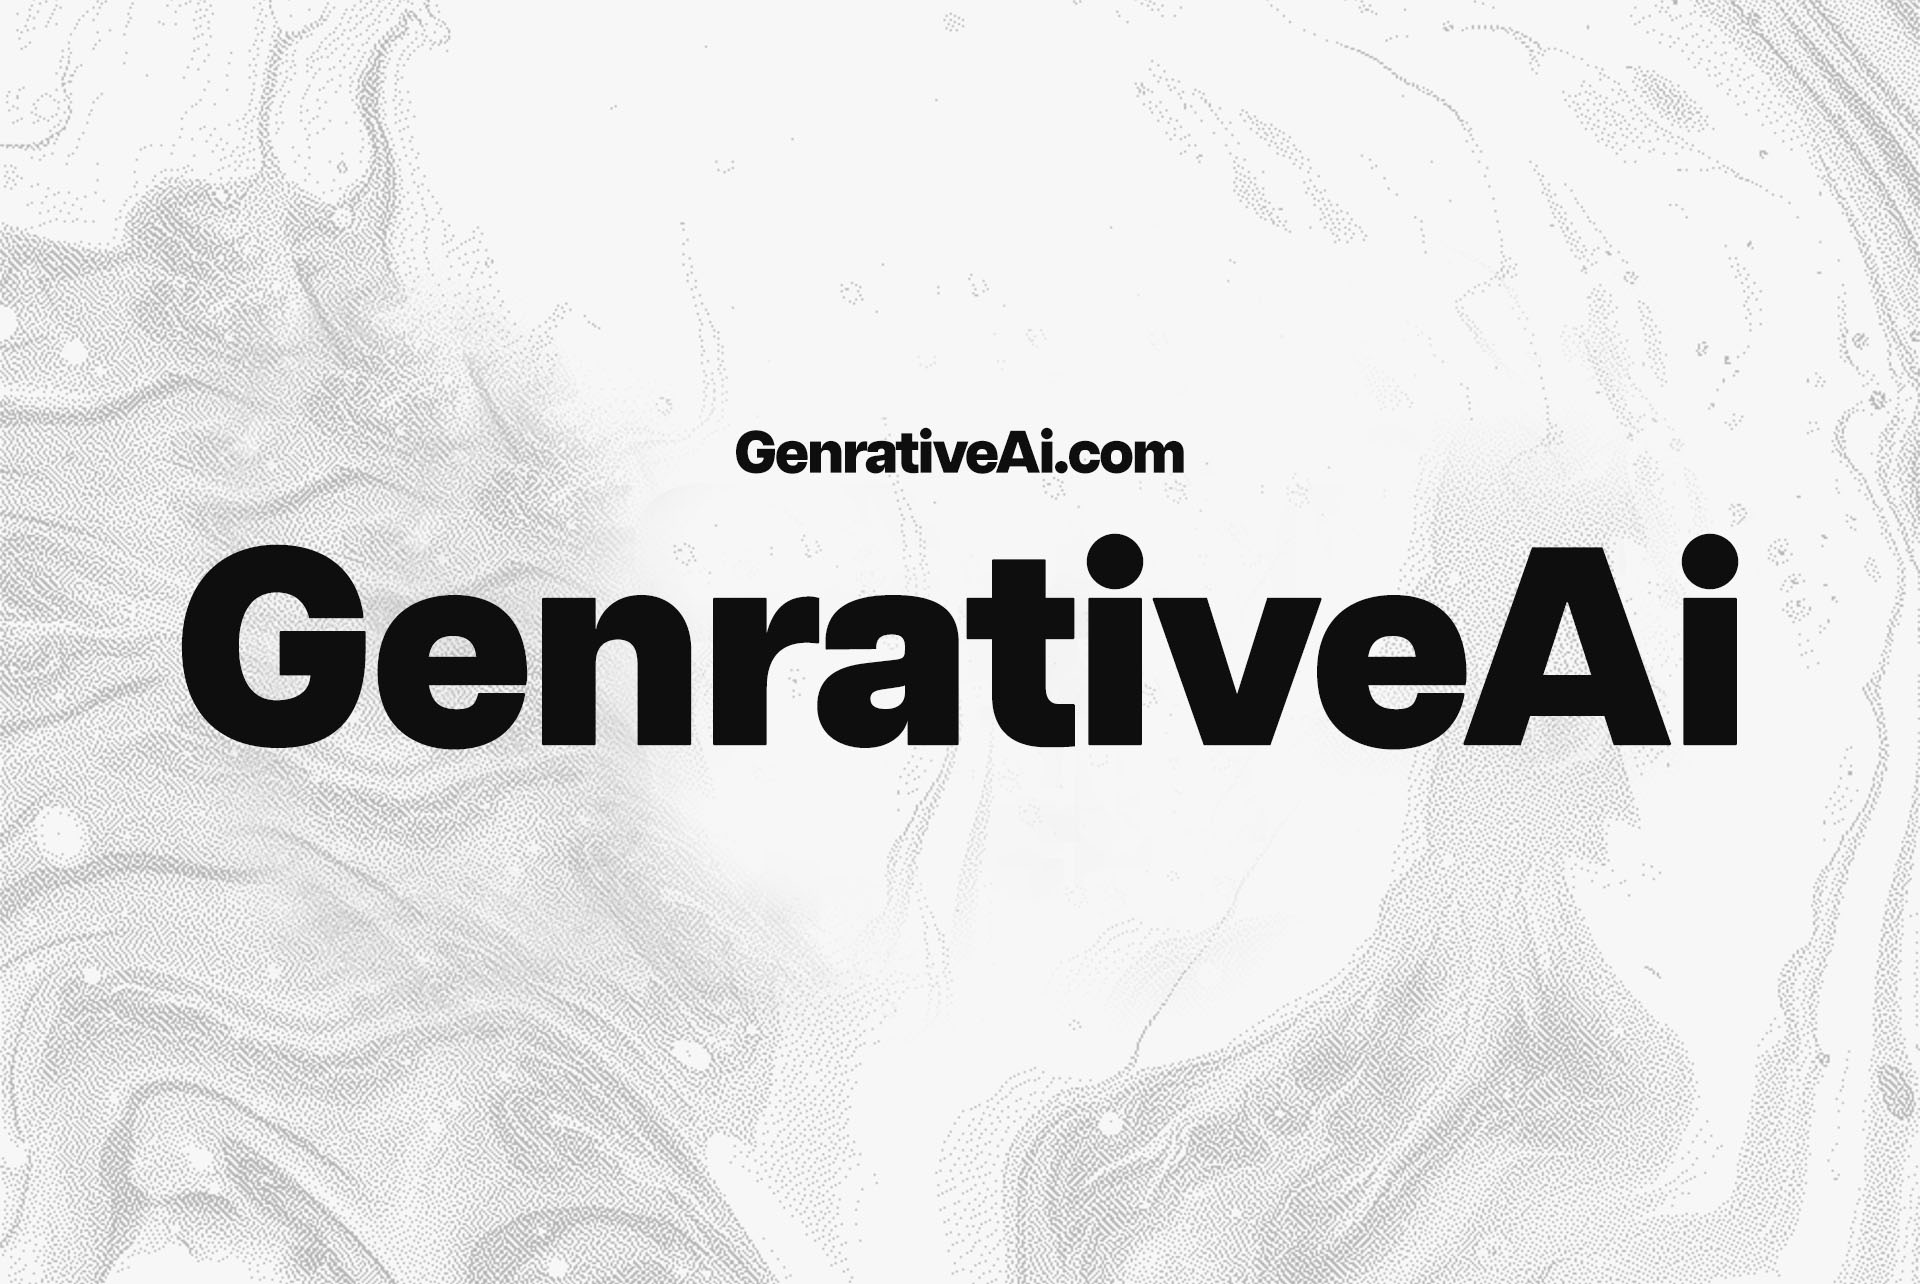 generativeai domain name for sale.jpg